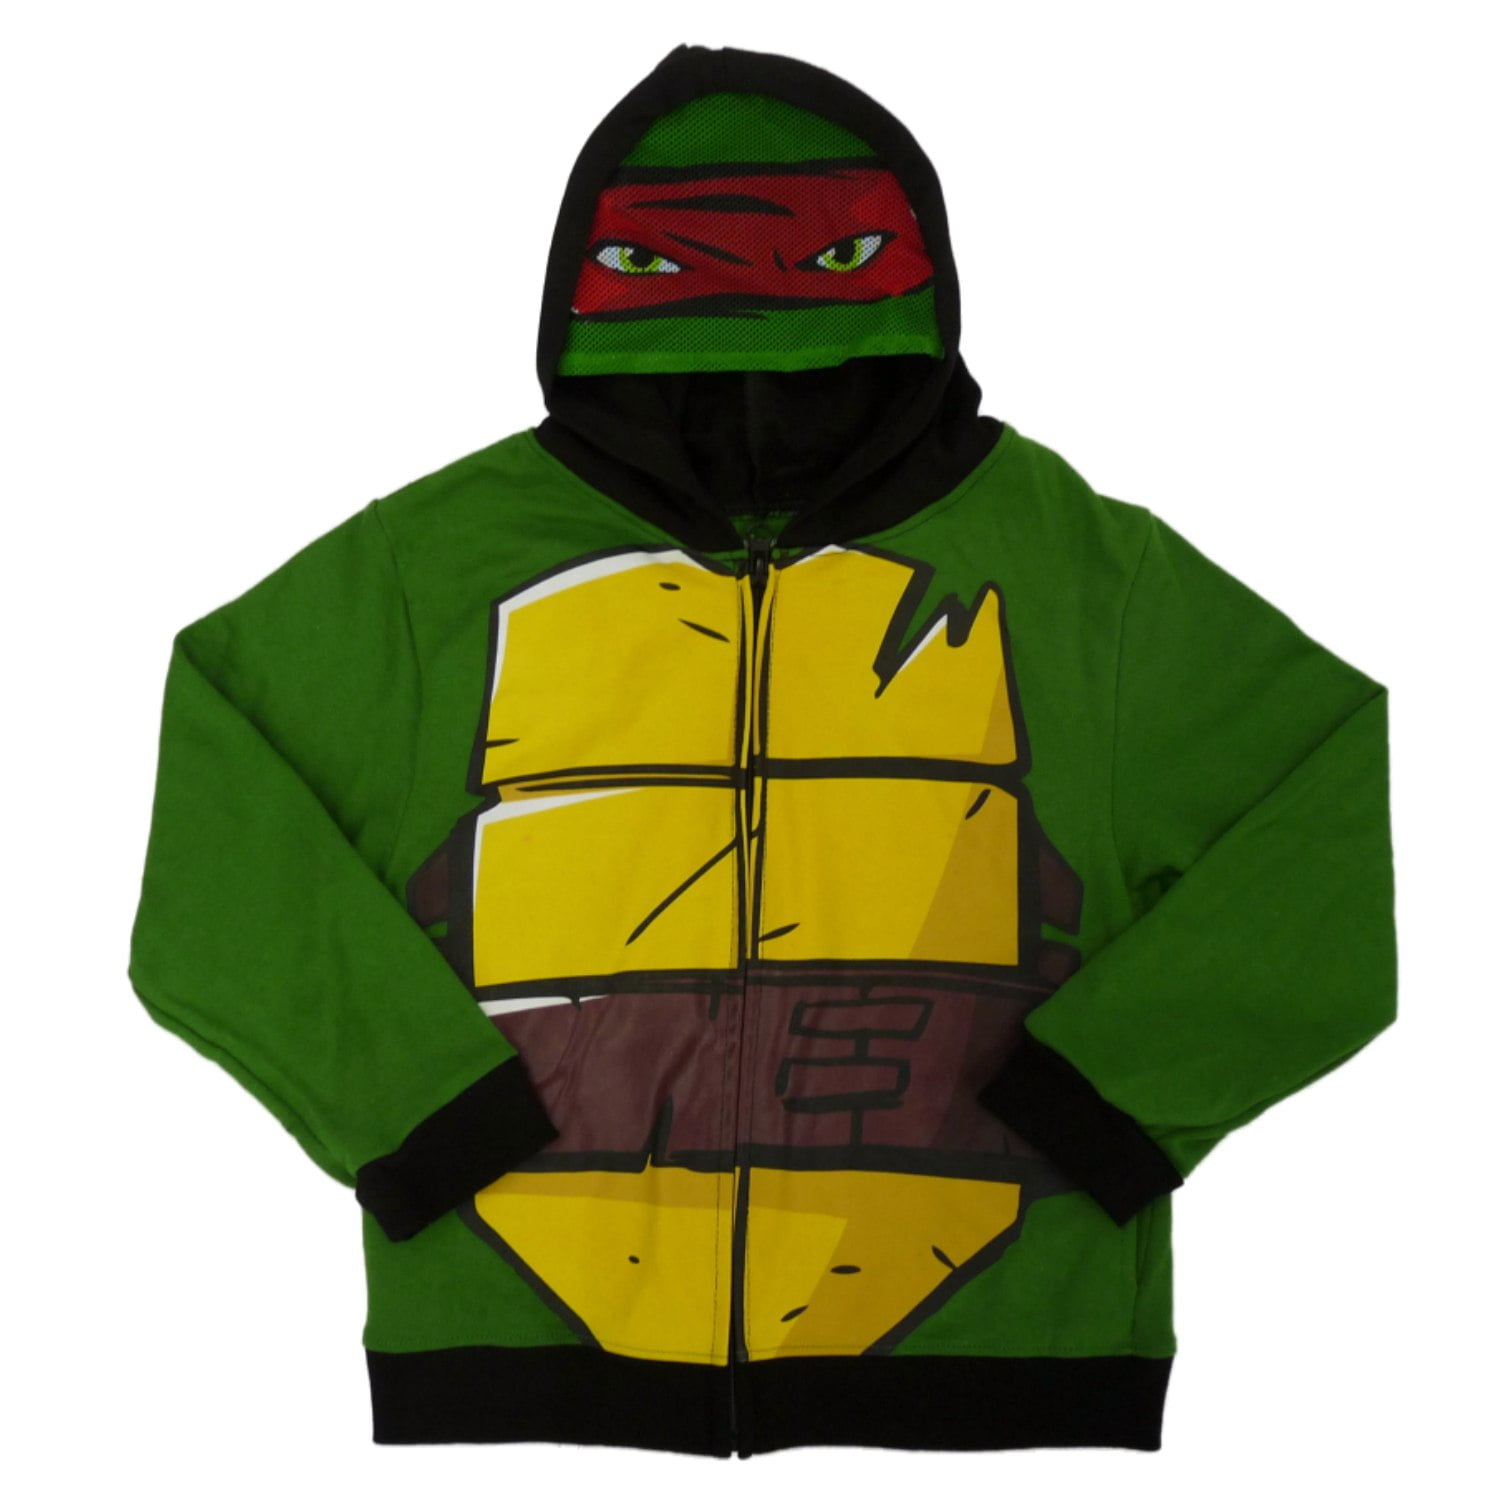 Brandnew TMNT Ninja Turtles 3pc Track Suit Hoodie Jacket pants tracksuit 